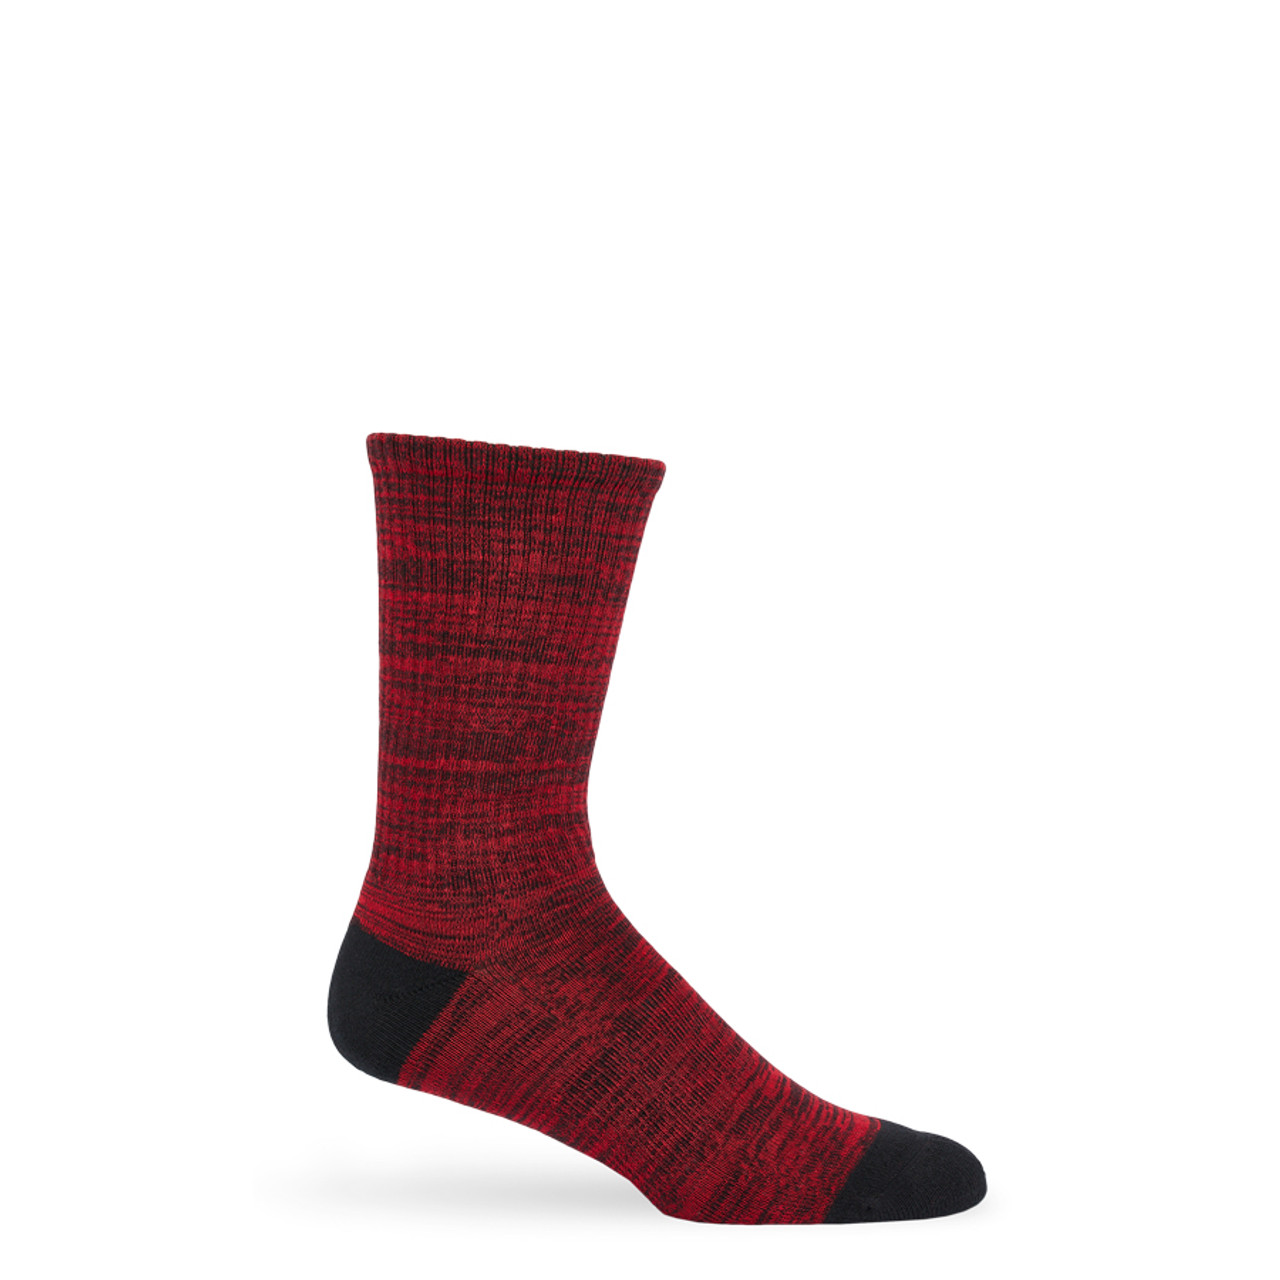 Red and Black Marl Socks, Bouncy Cushion and Flat Seams